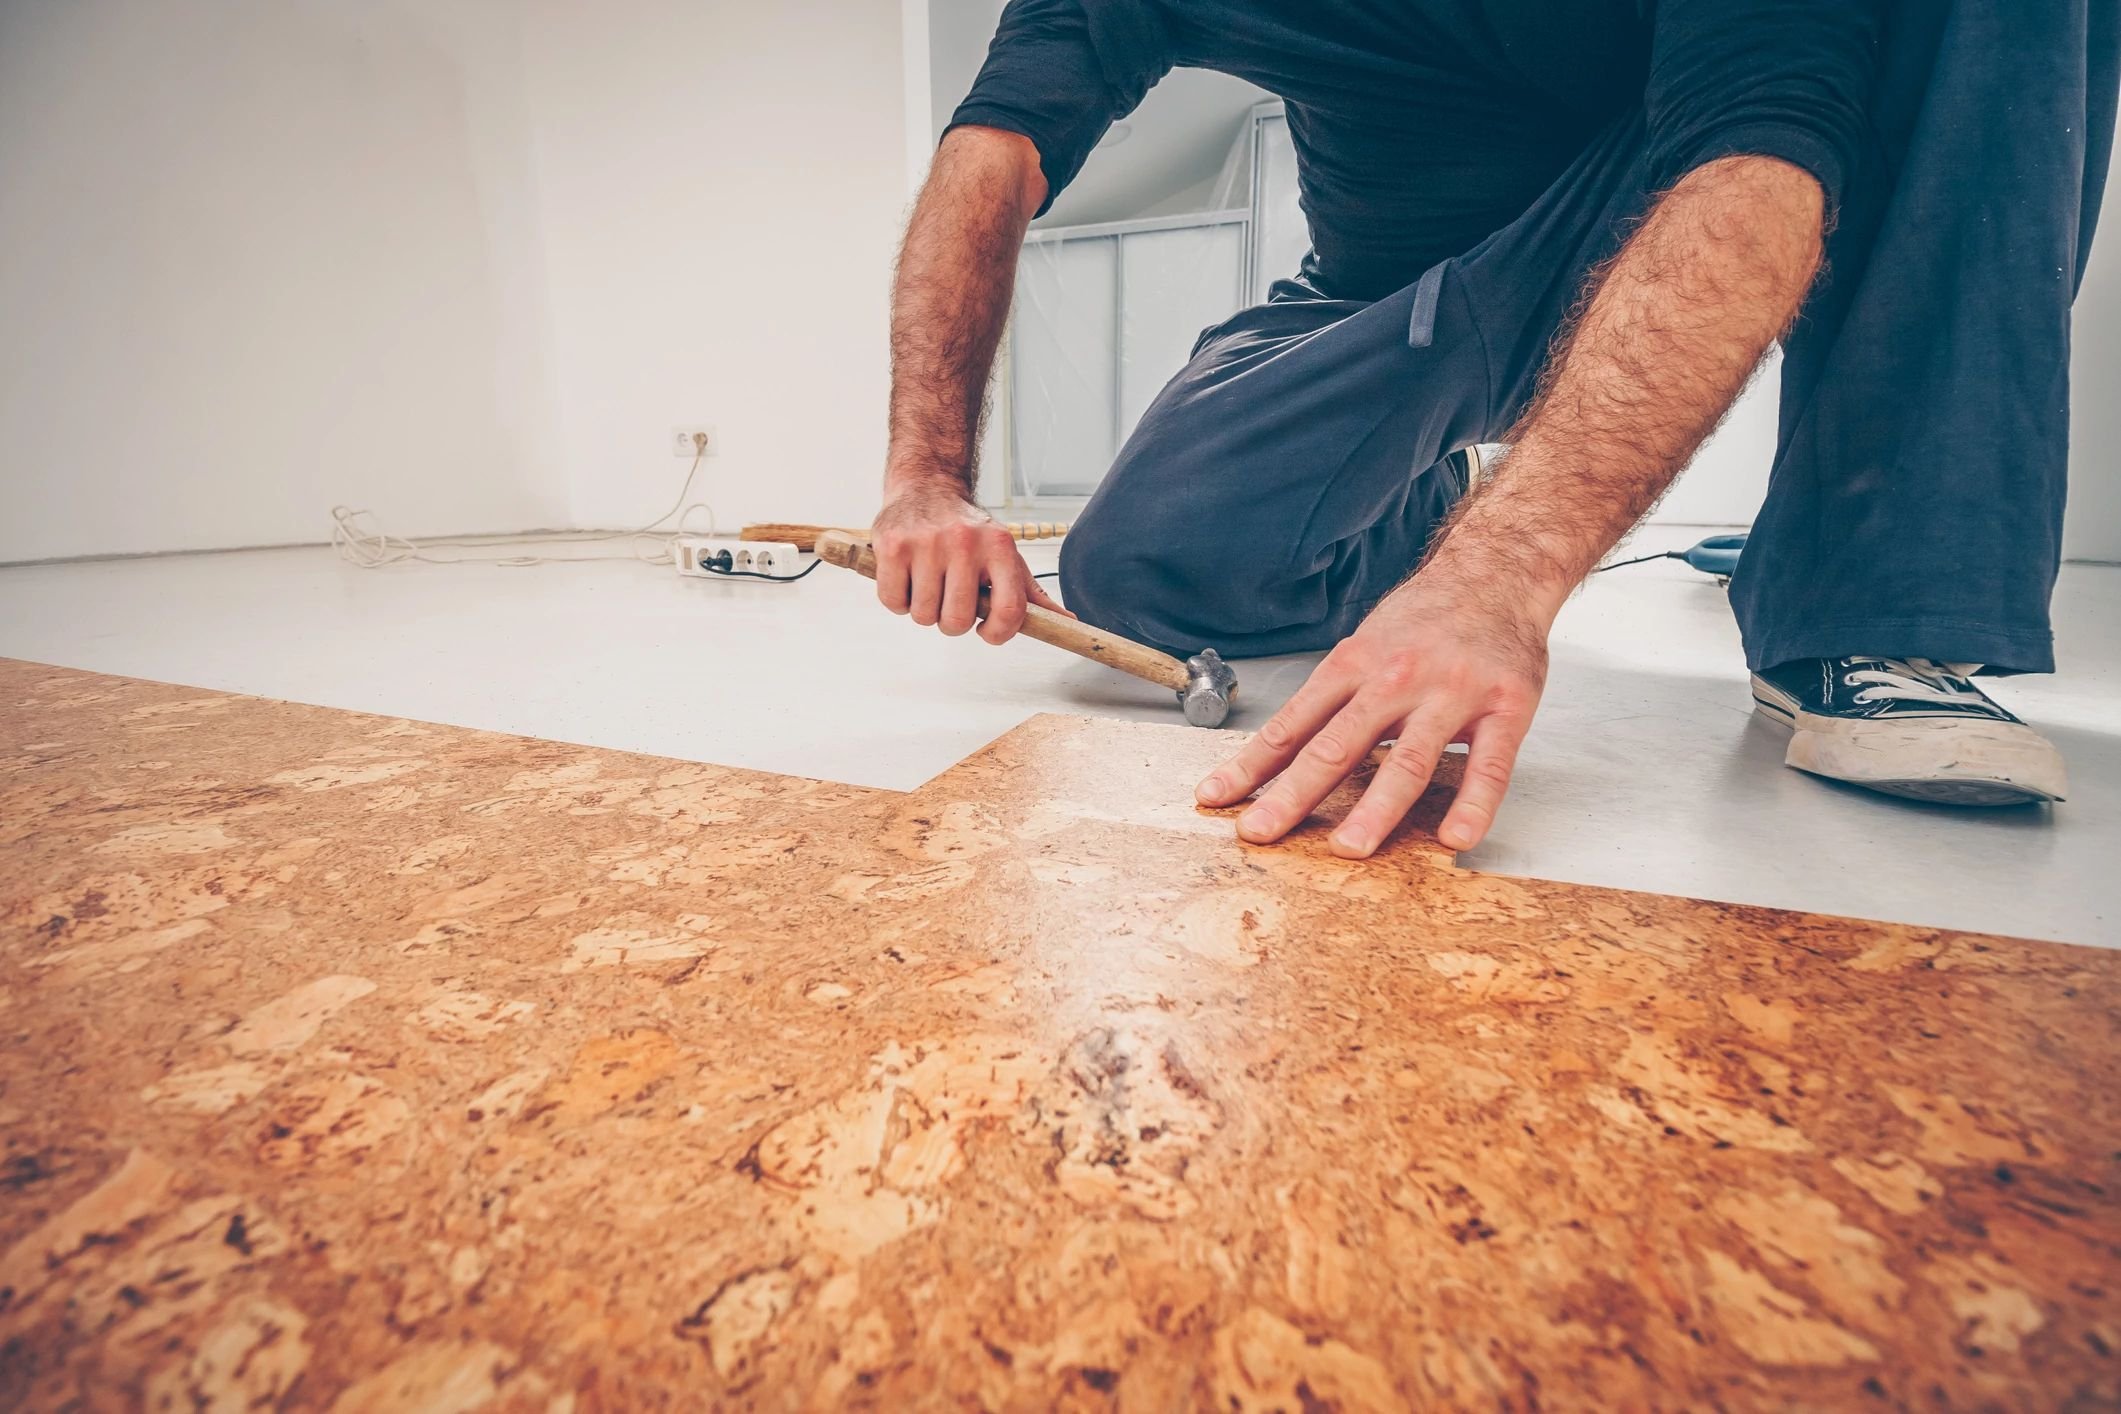 More-for-home-cork-installation-renovation-2021 Laydwel Floors in Appleton